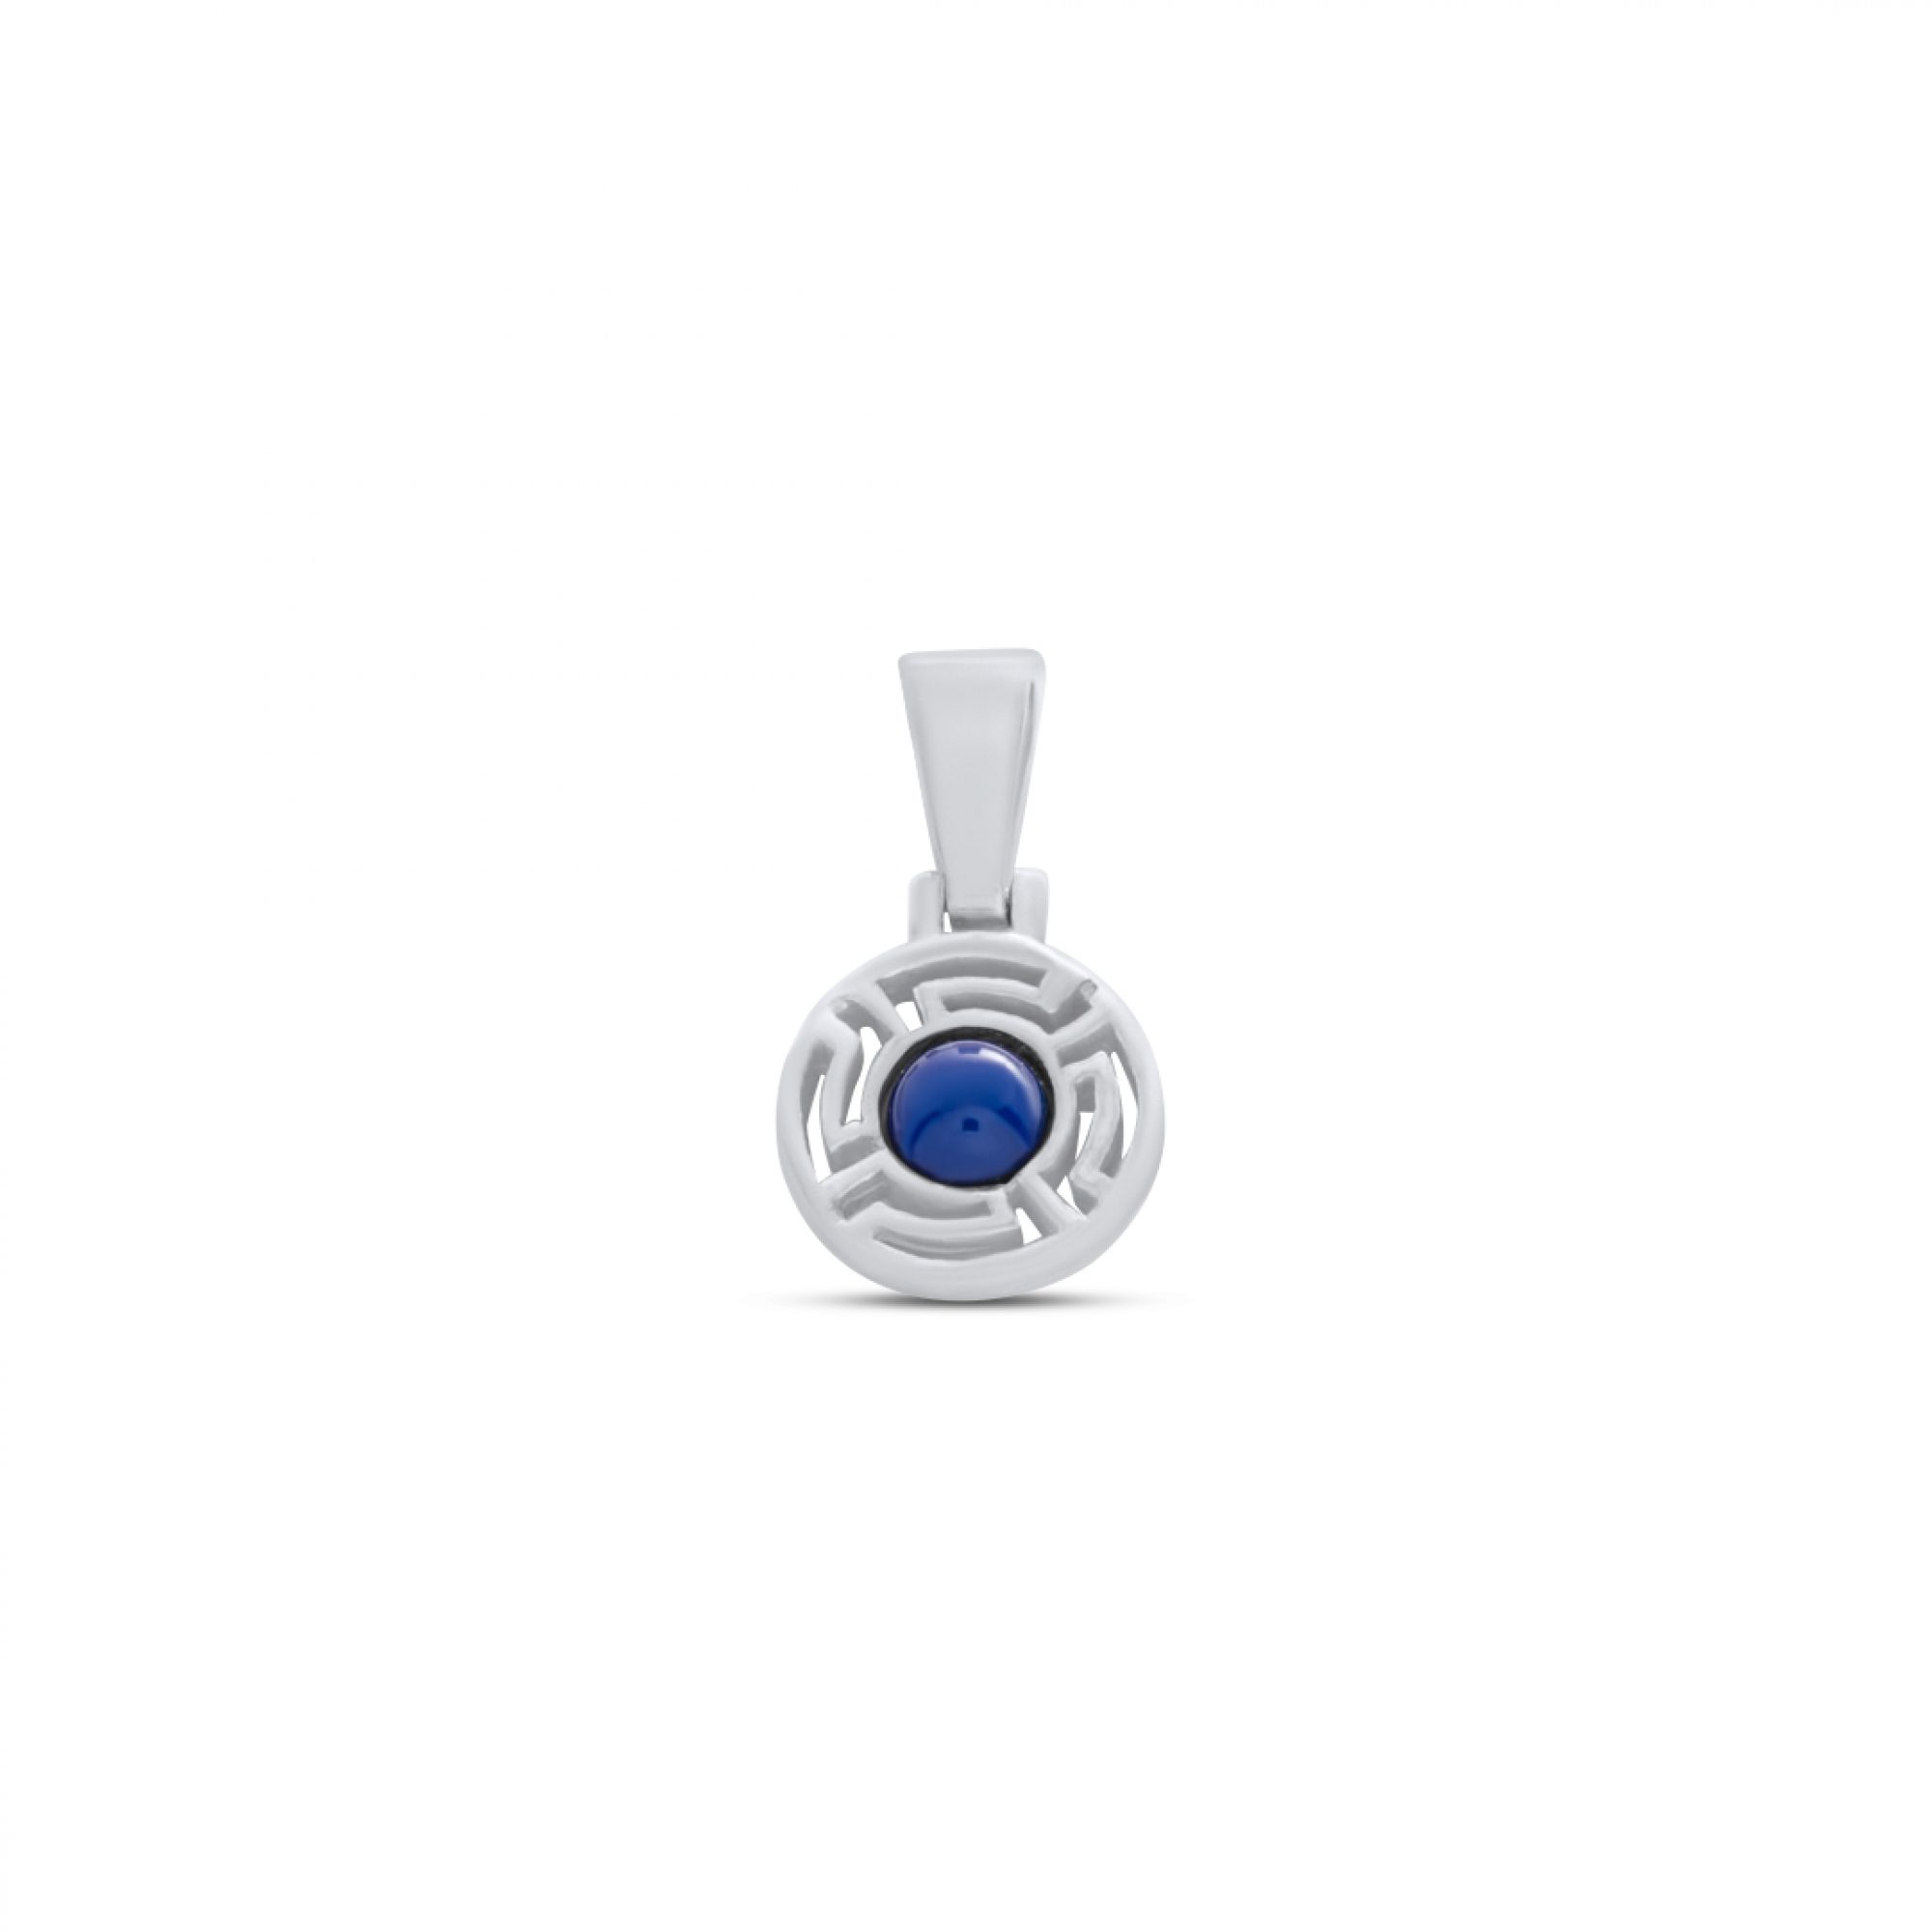 Meander pendant with lapis lazuli stone